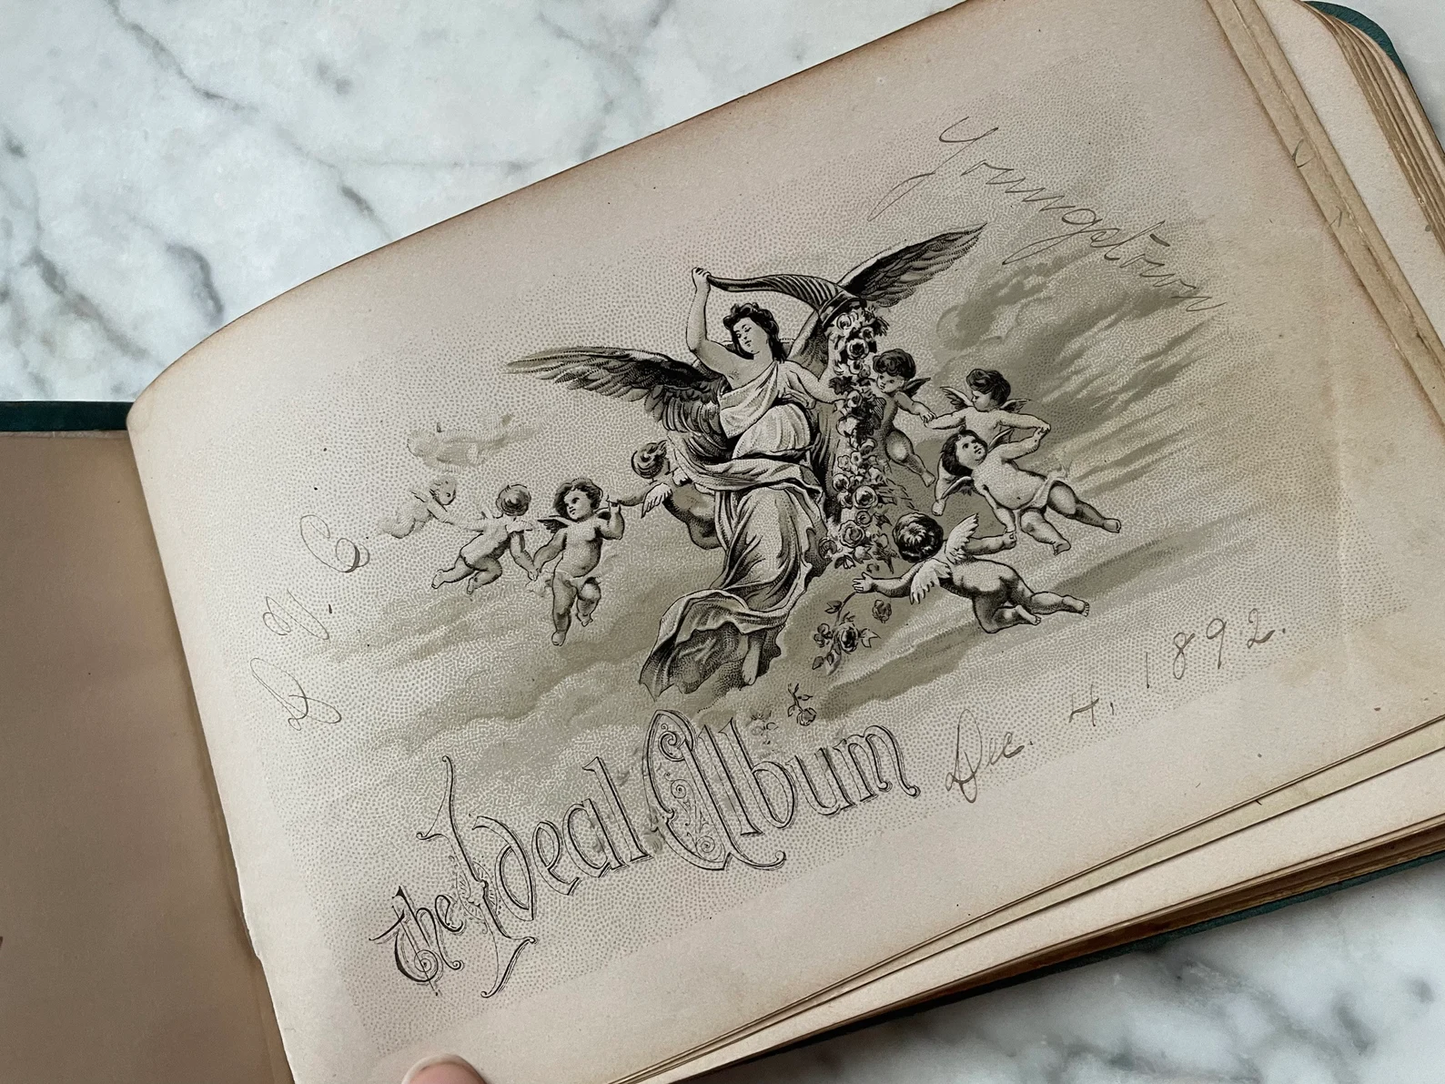 Victorian Autograph Album with Athena Cover